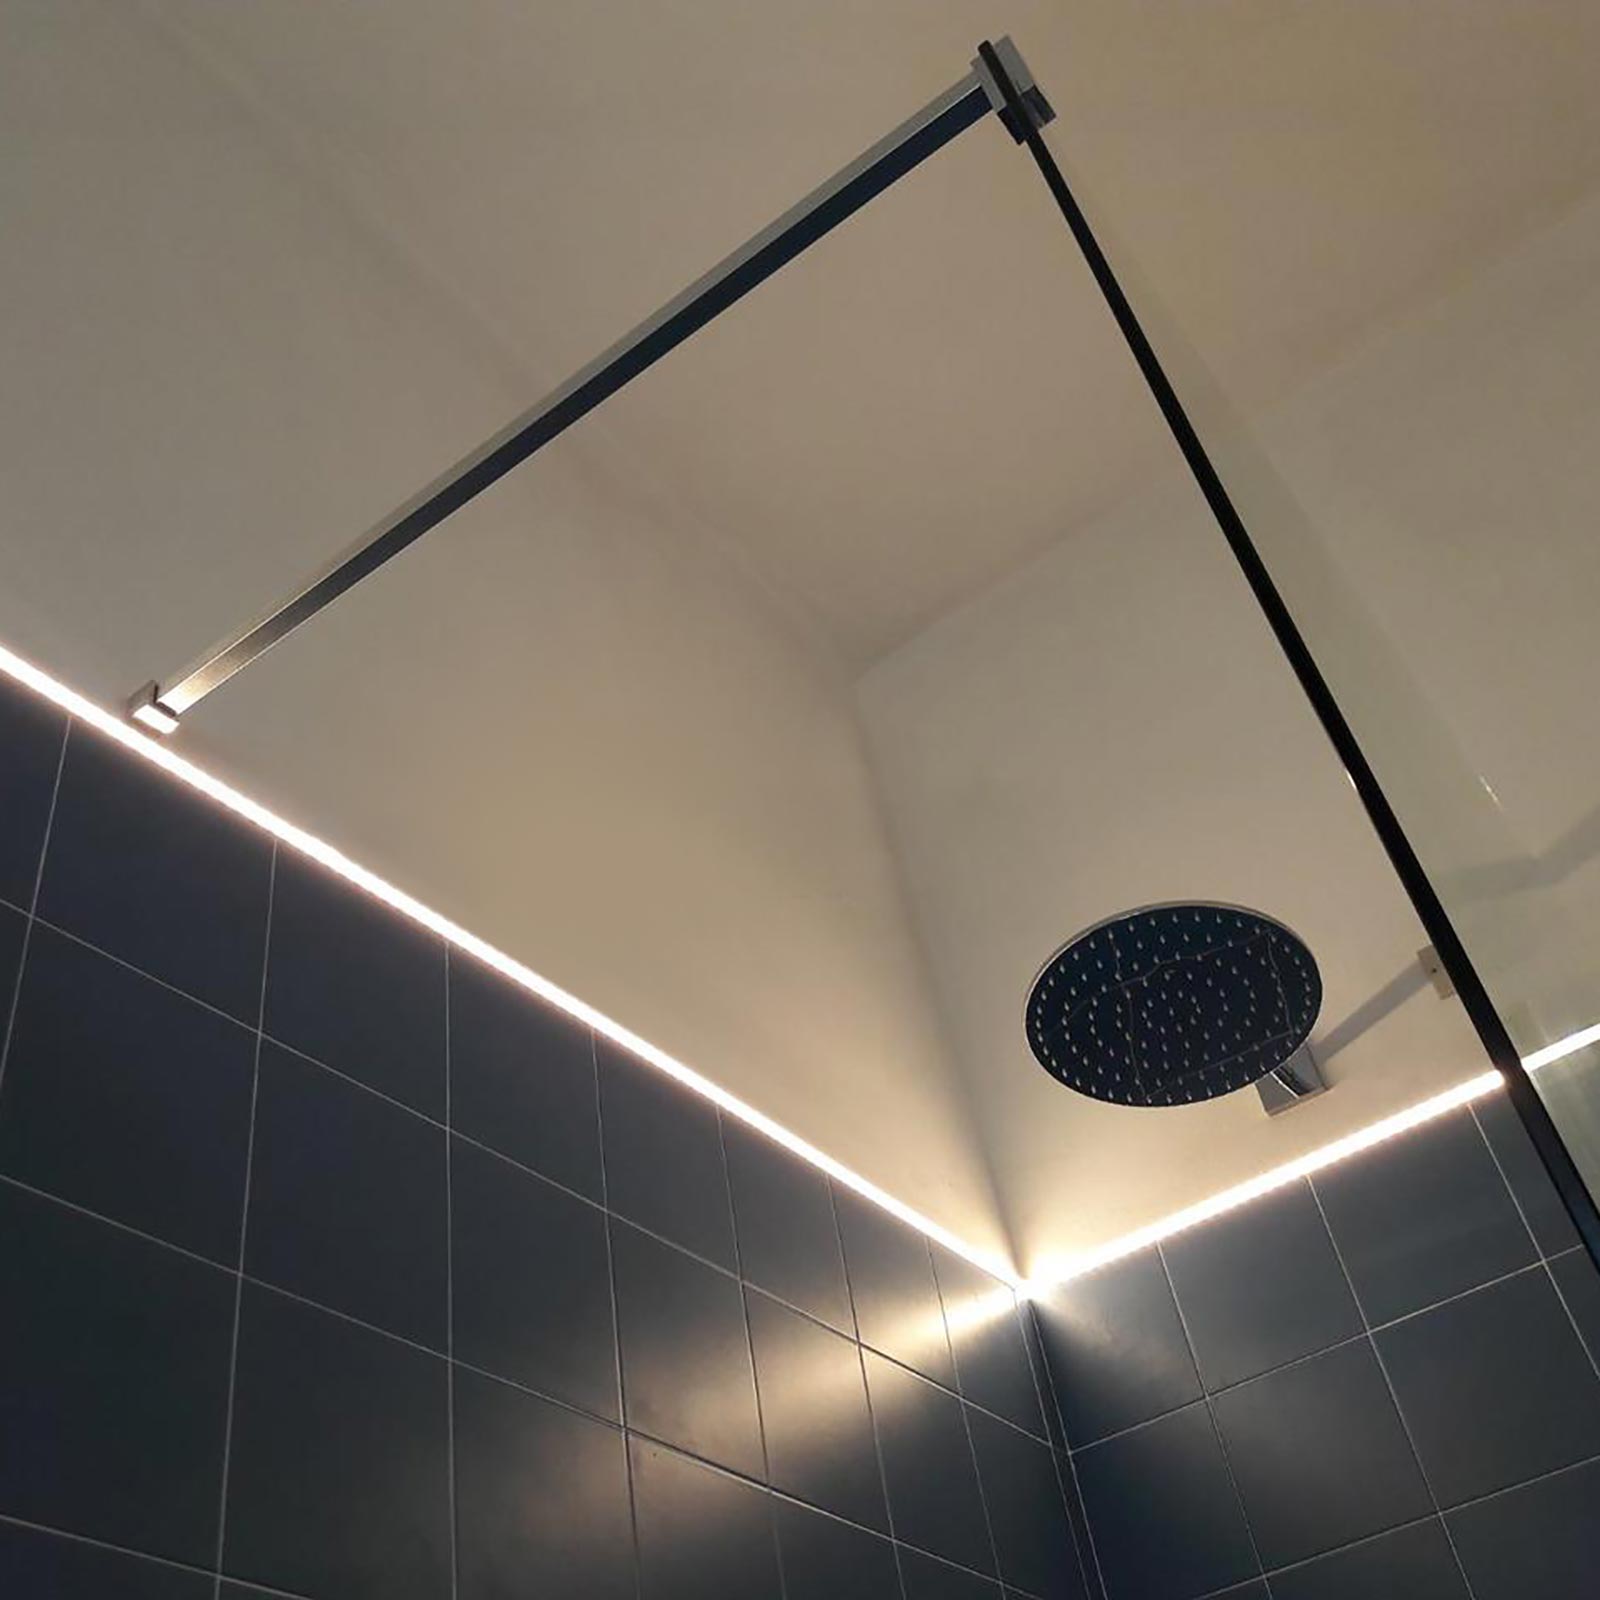 Striscia LED tenuta stagna IP68 Linear COB flessibile Neon Flex dimmerabile 24V luce per doccia sauna bordo vasca 6000K